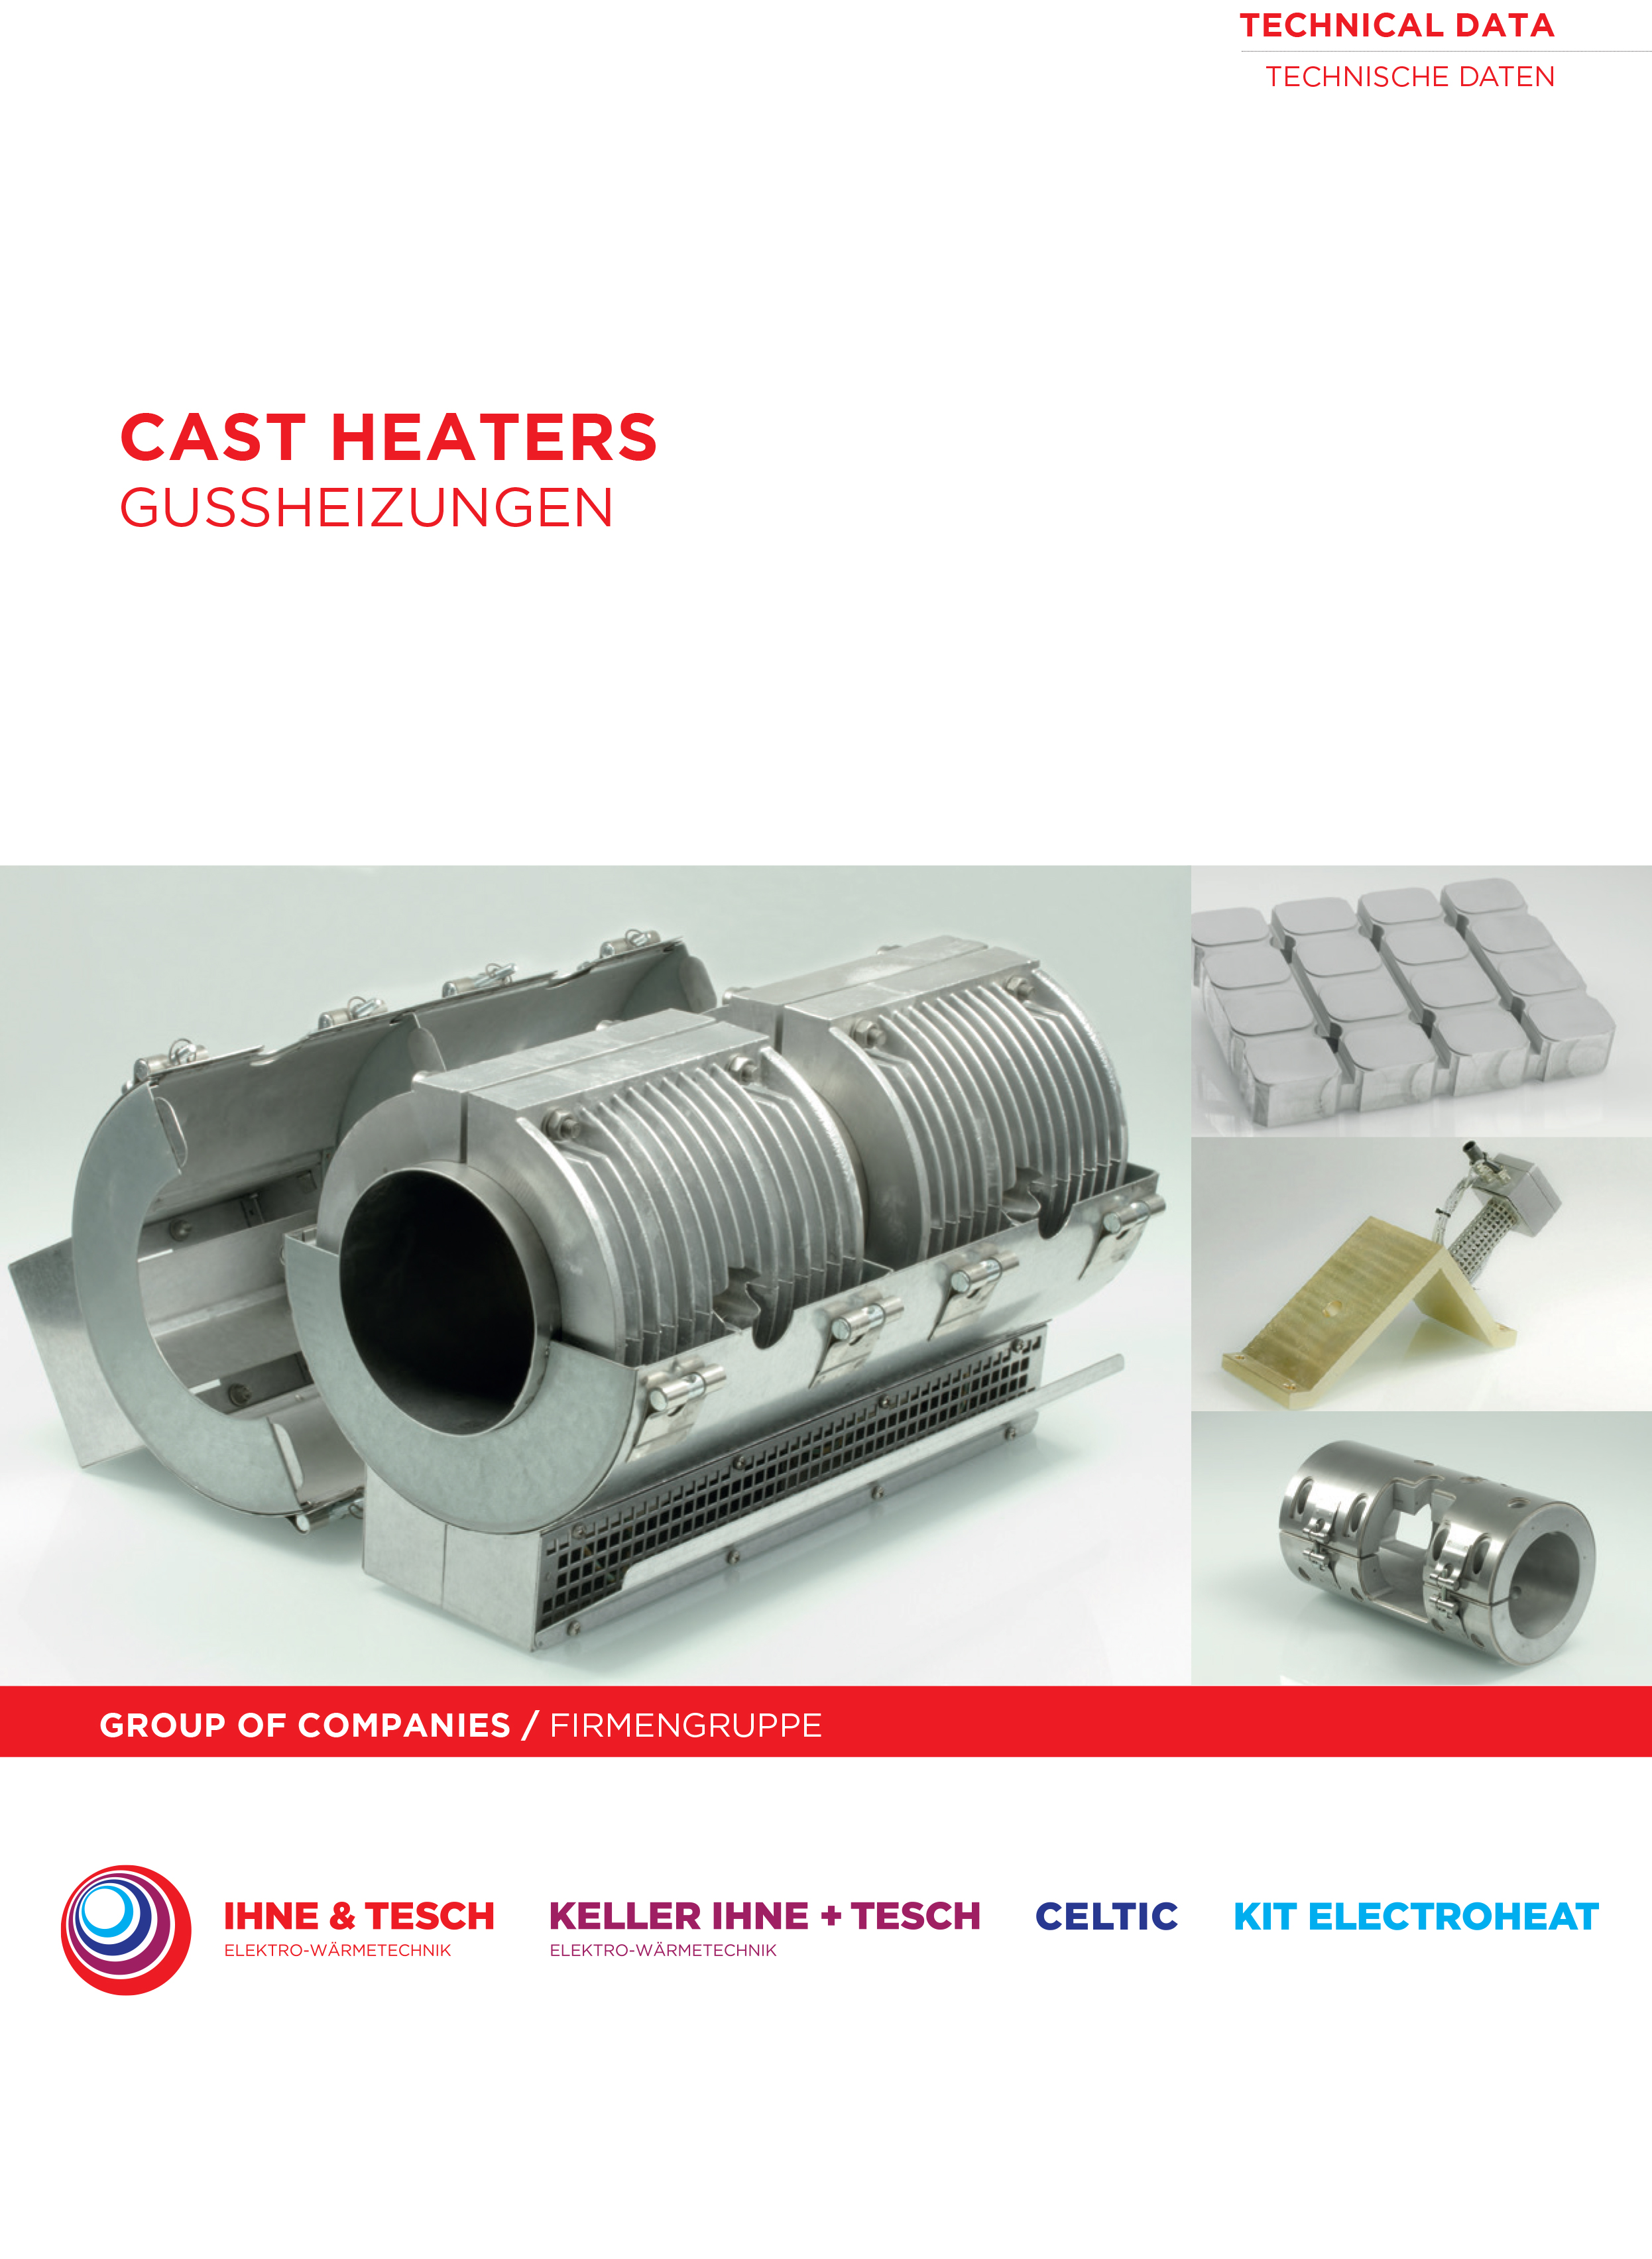 Cast-Heaters-technical-data